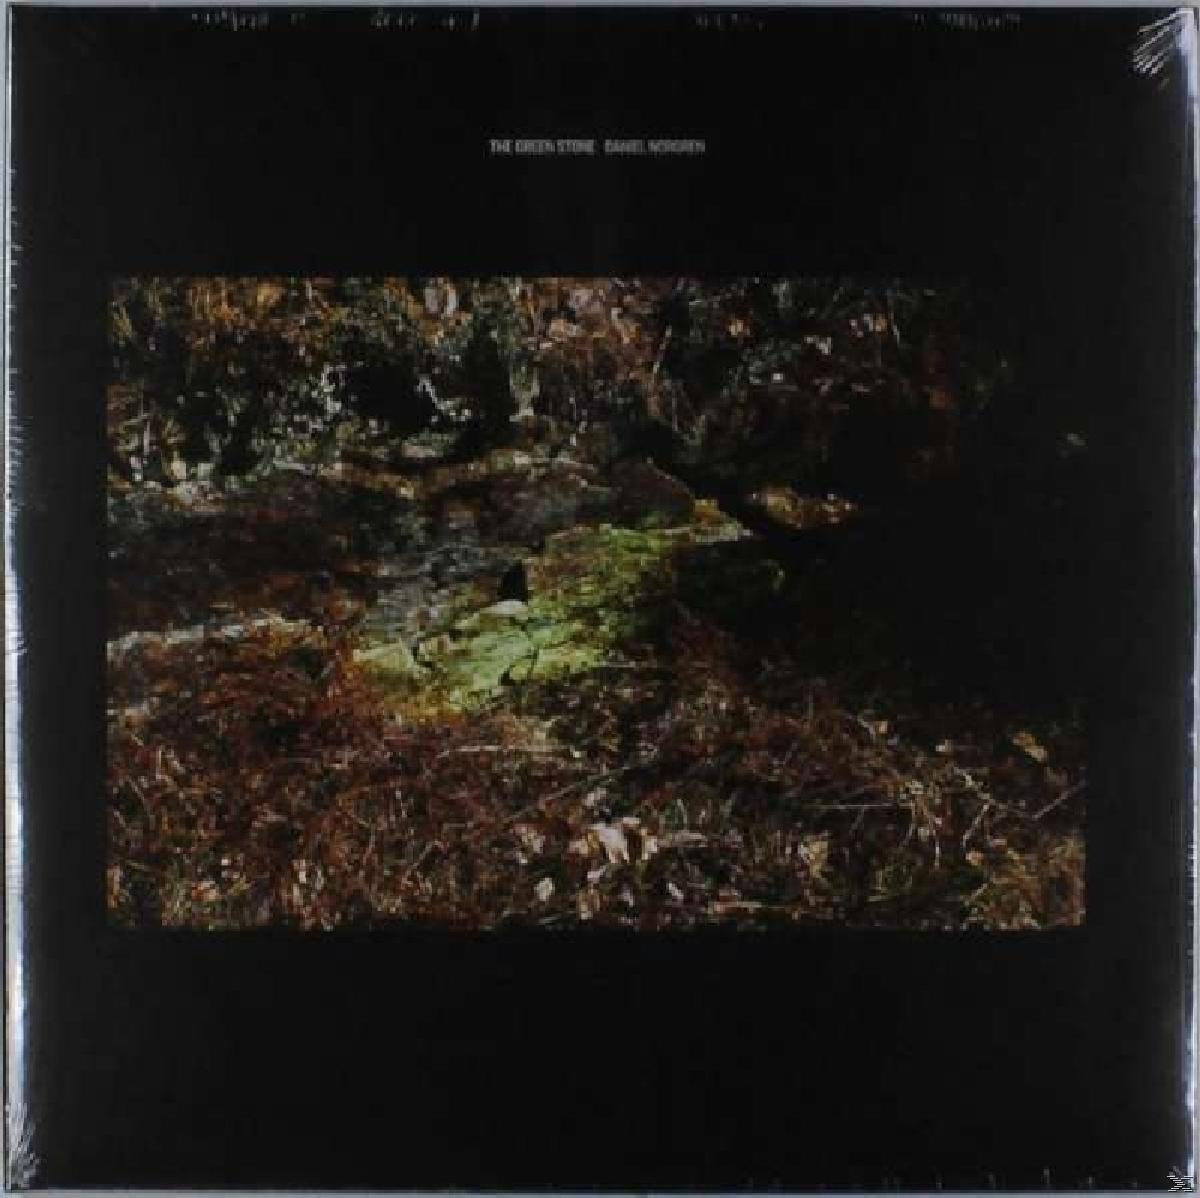 Daniel The Stone - (Vinyl) Green Norgren -